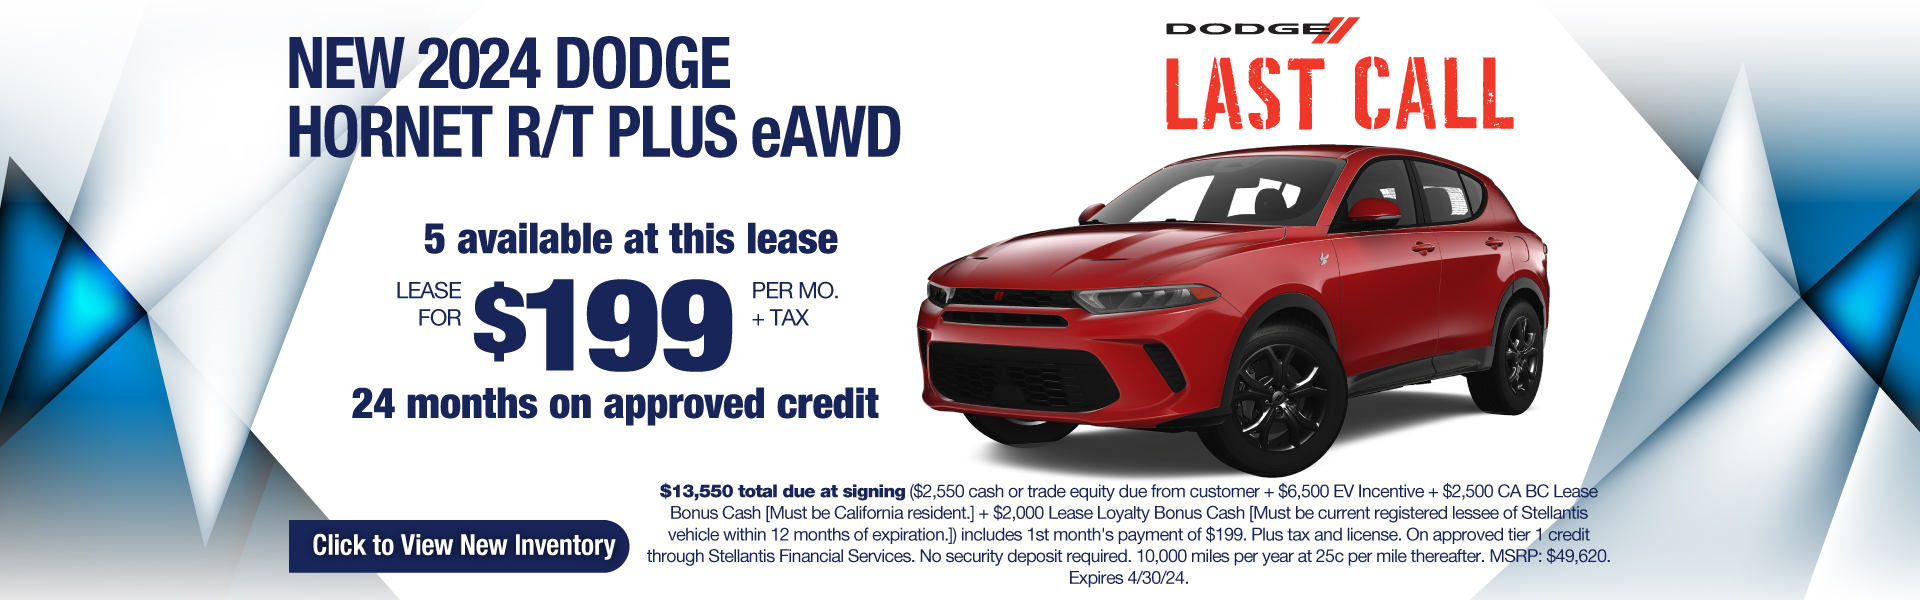 Lease a New 2024 Dodge Hornet R/T Plus eAWD for $199 per month plus tax! Expires 4/30/24.